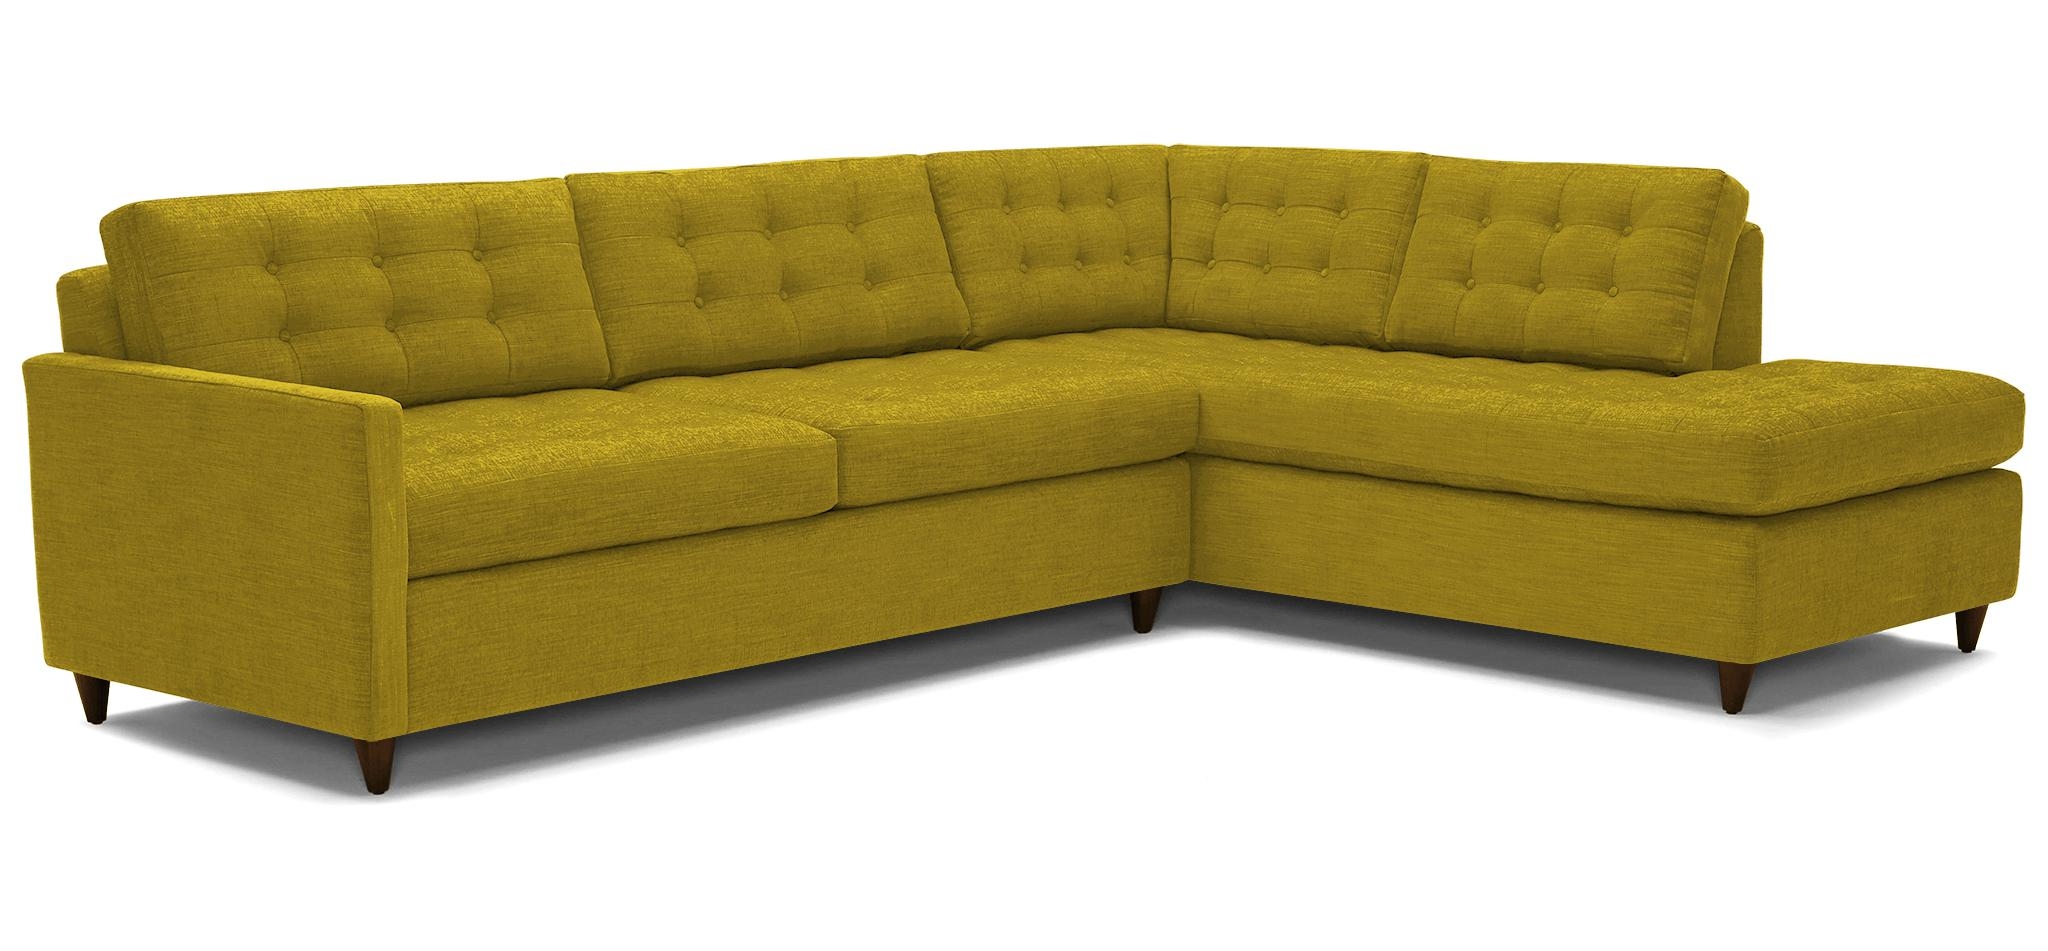 Yellow Eliot Mid Century Modern Bumper Sleeper Sectional - Bloke Goldenrod - Mocha - Right  - Image 1